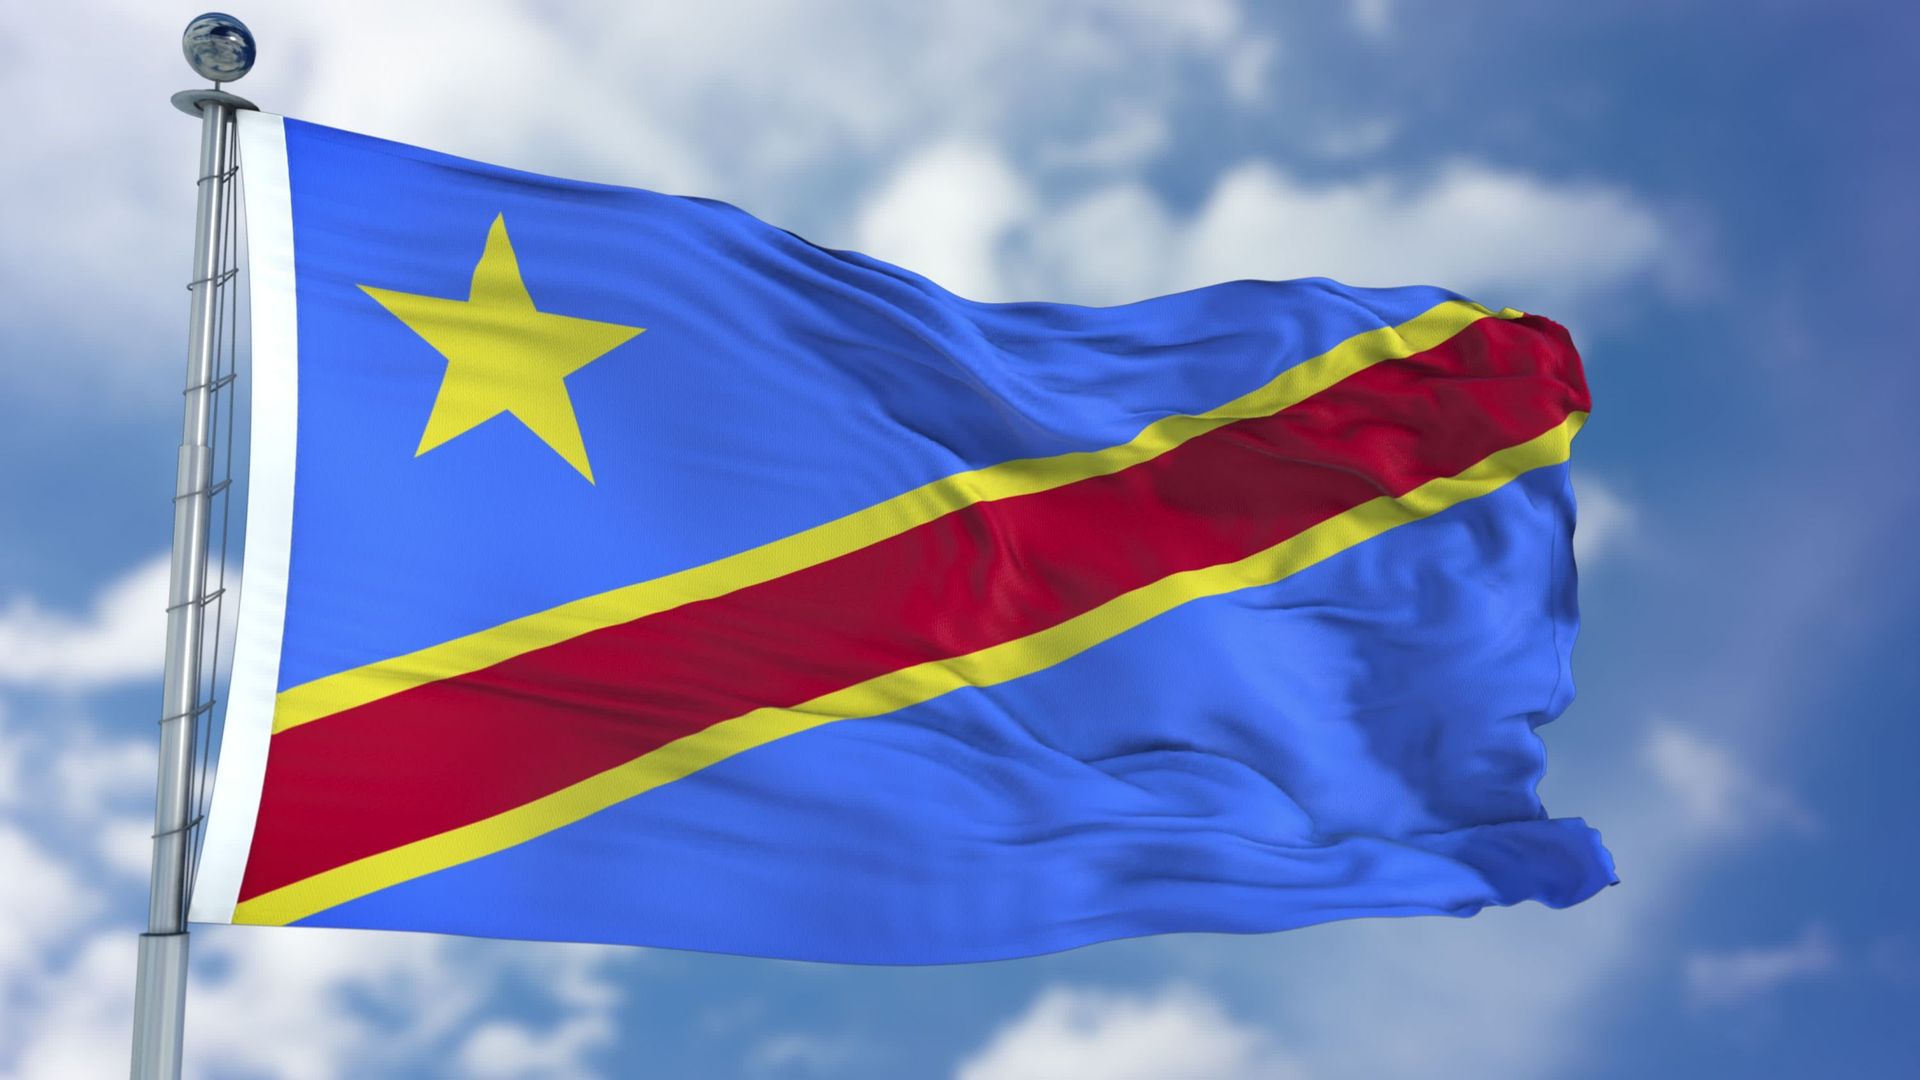 Congo Democratic Republic Flag in a Blue Sky